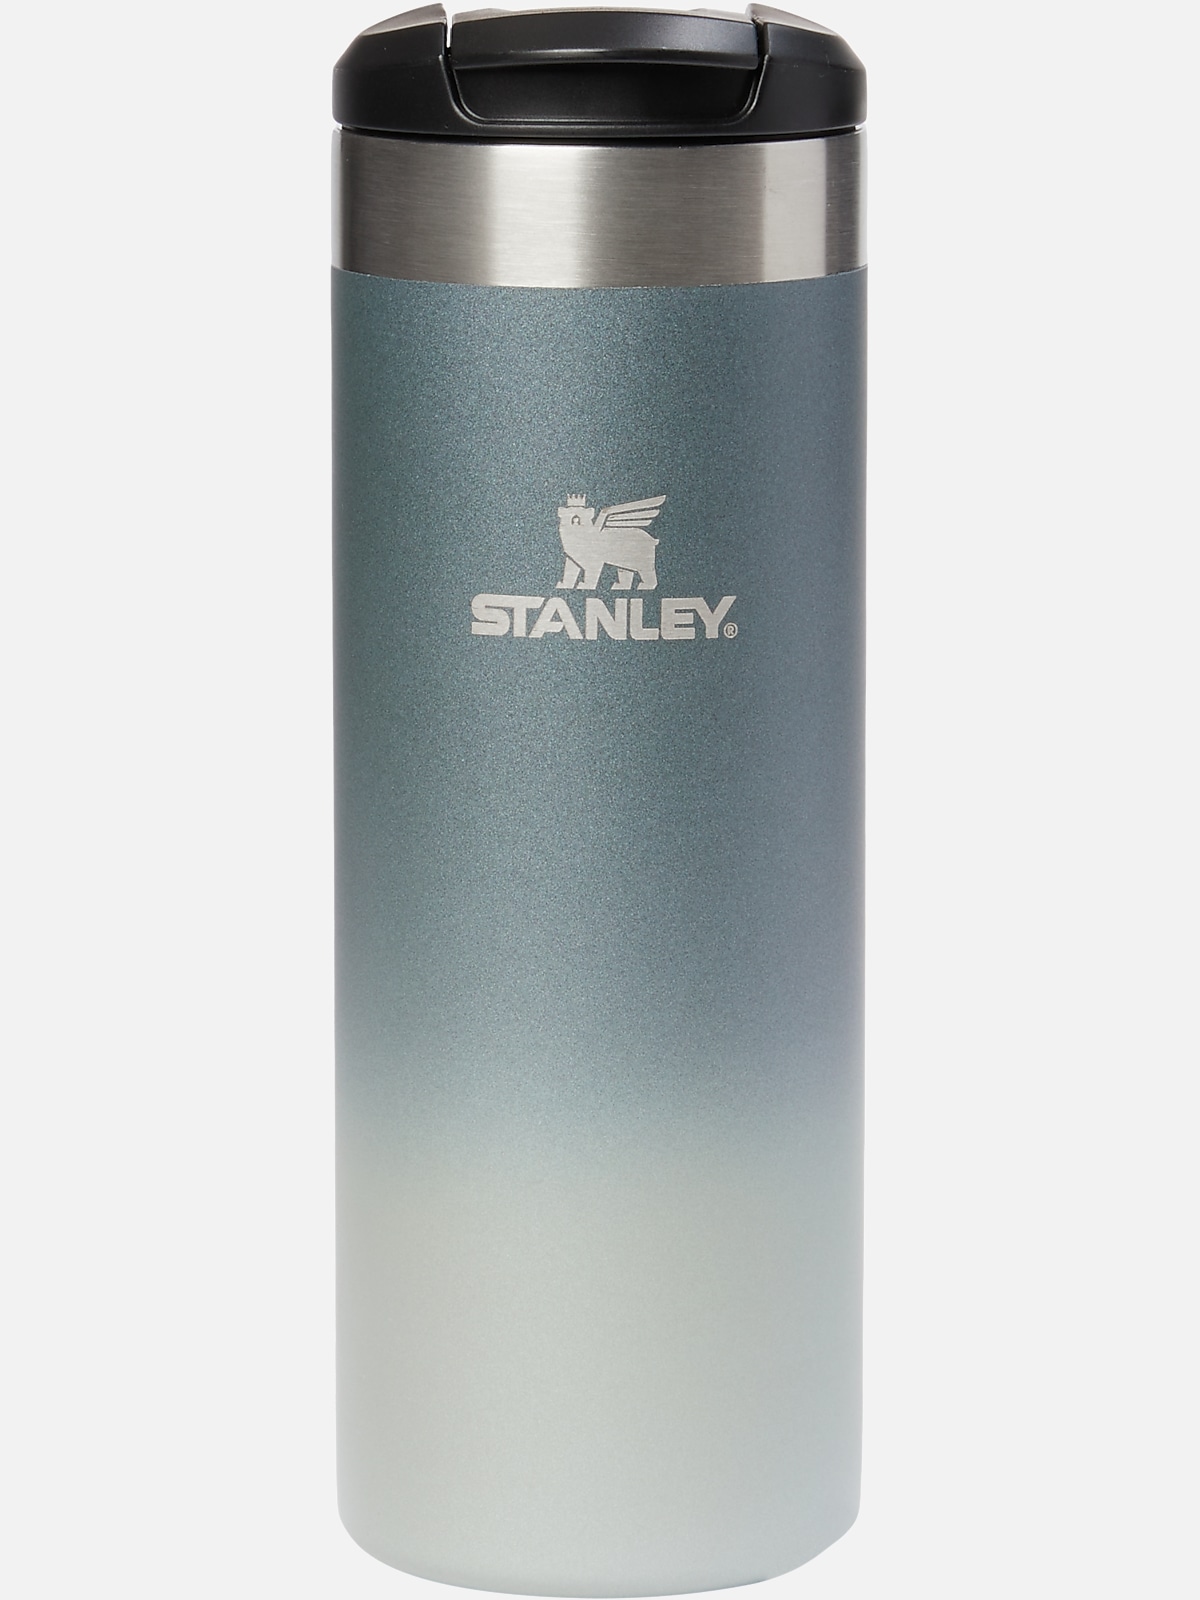 Stanley AeroLight Transit Bottle, Gifts